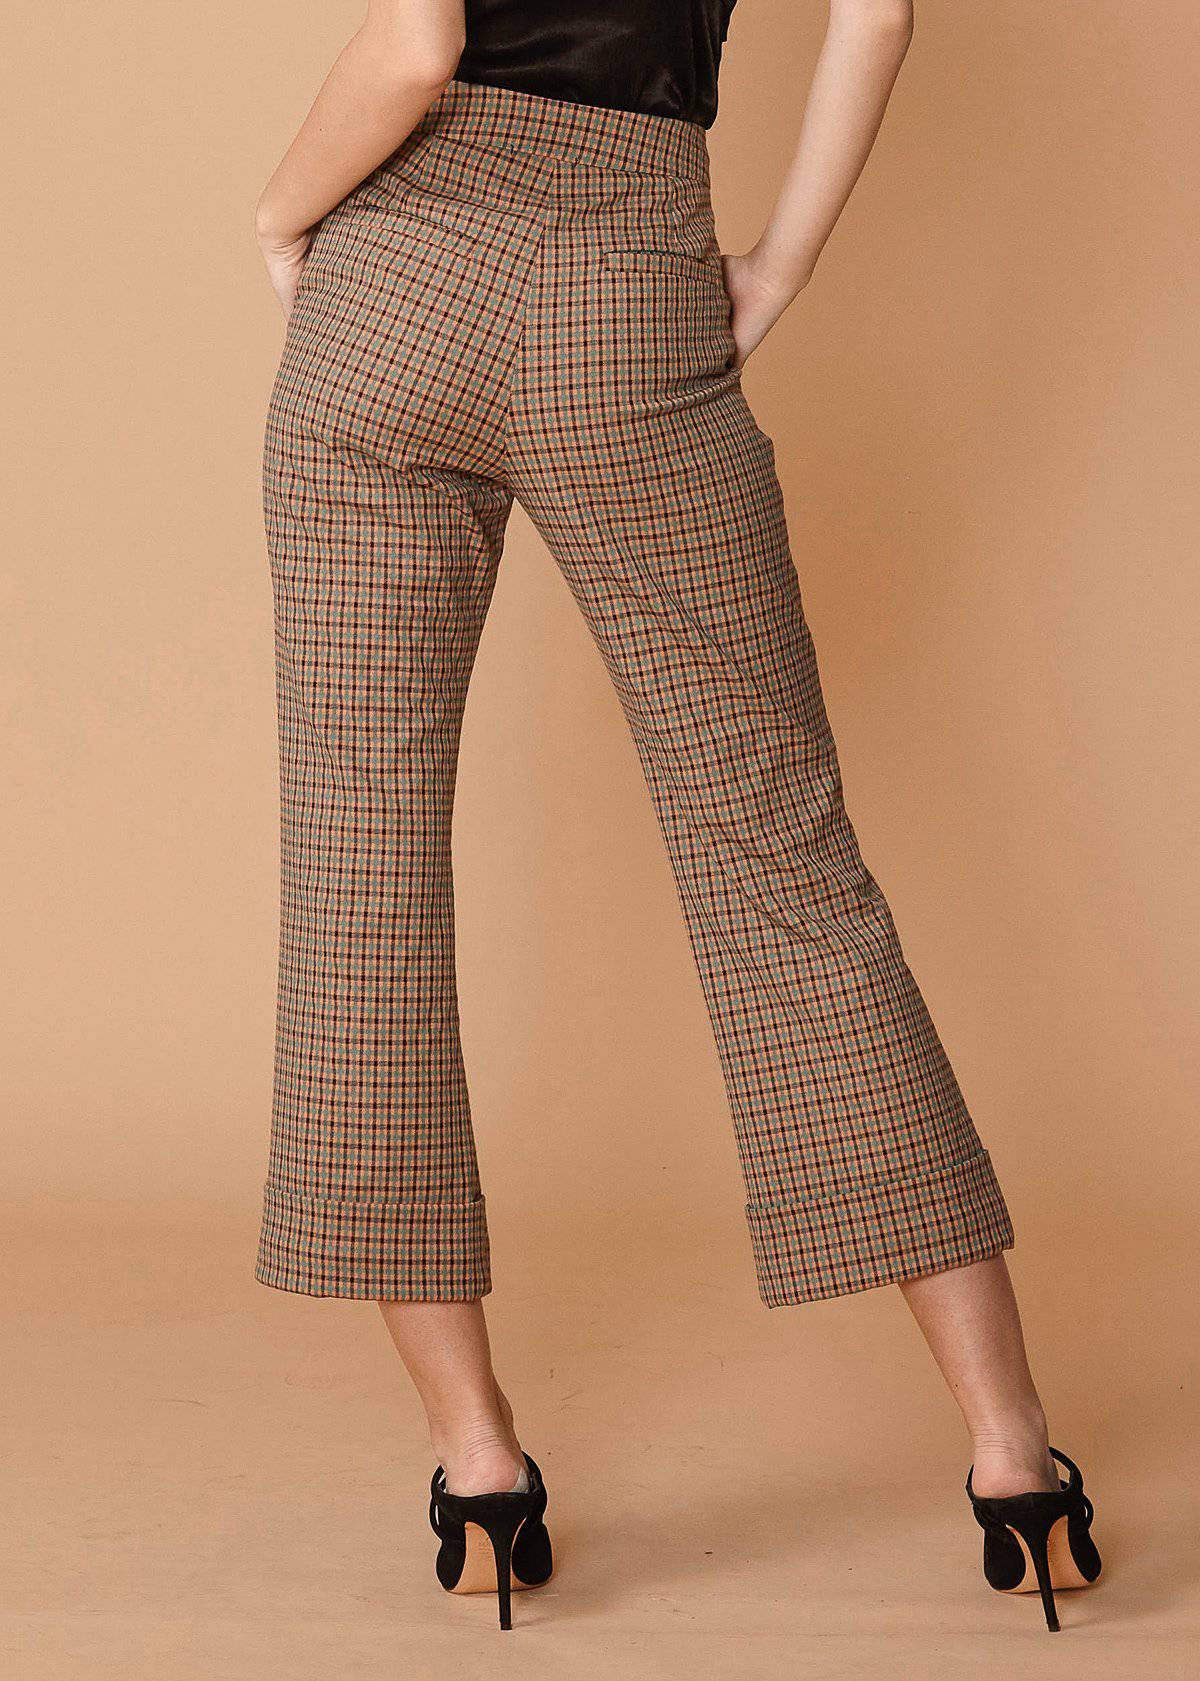 Women's Wide Cuff Trouser in Peach Gingham by Shop at Konus